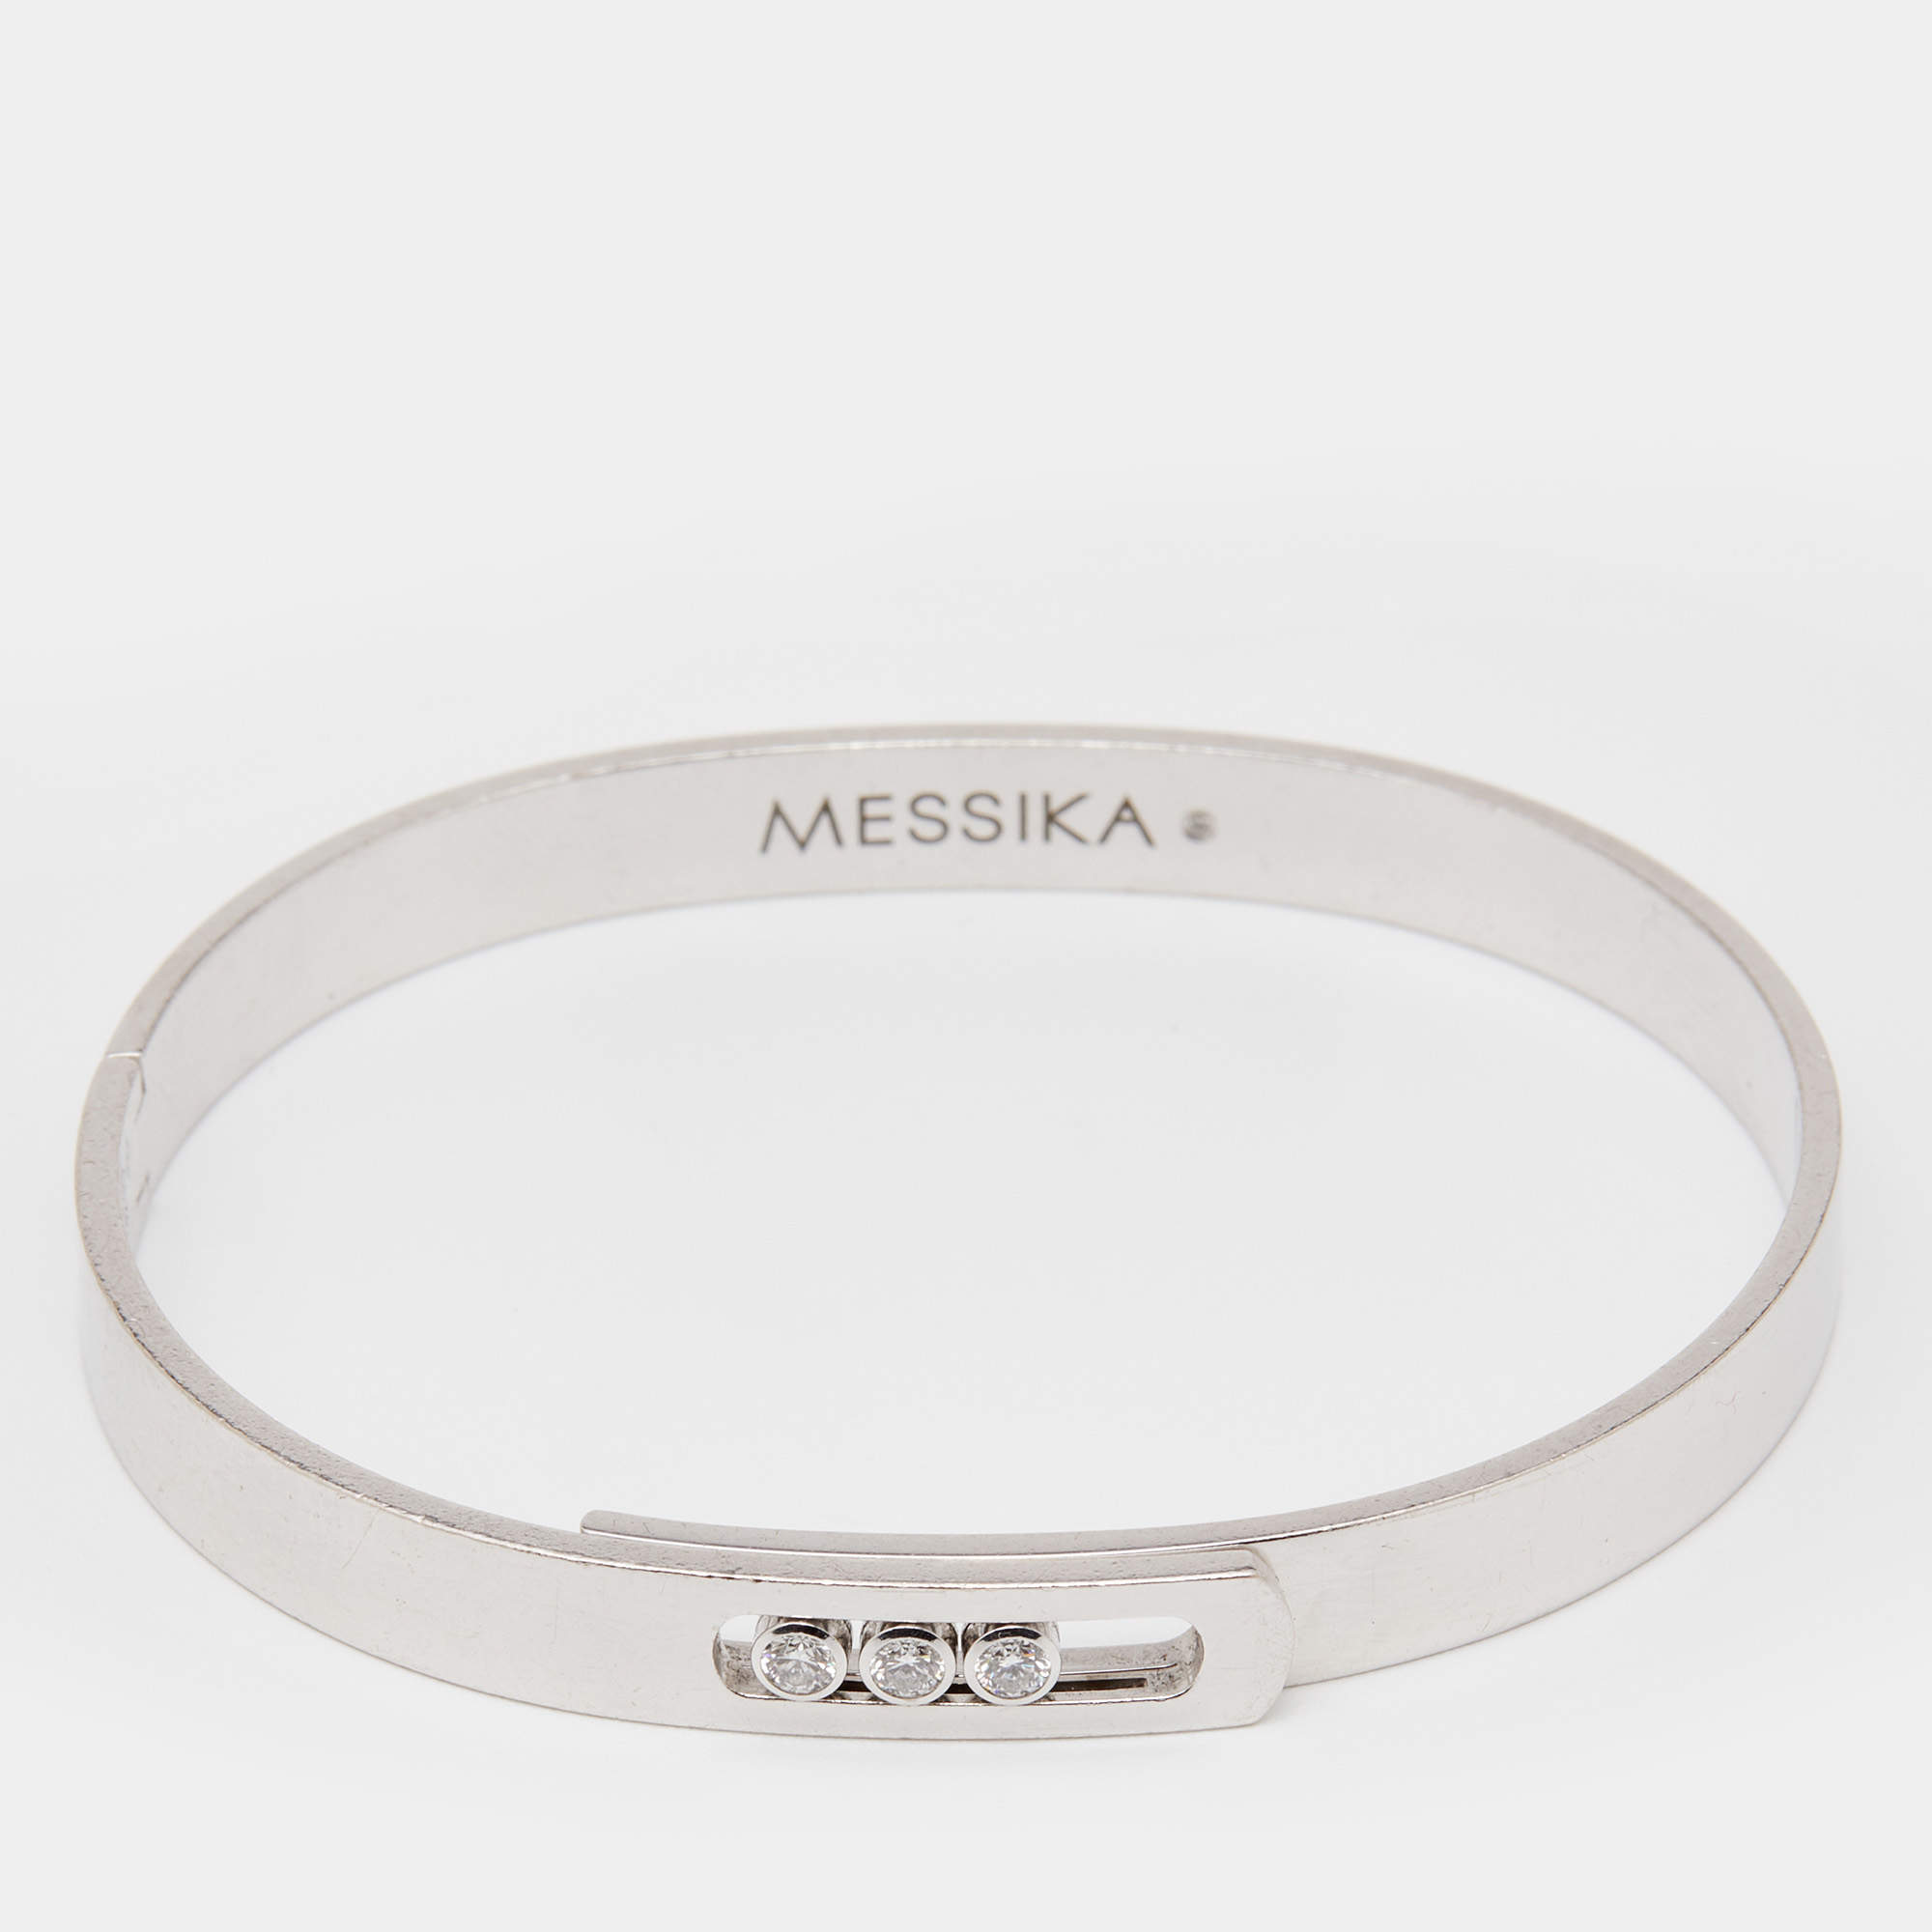 Messika Move Noa Diamonds 18k White Gold Bangle Bracelet